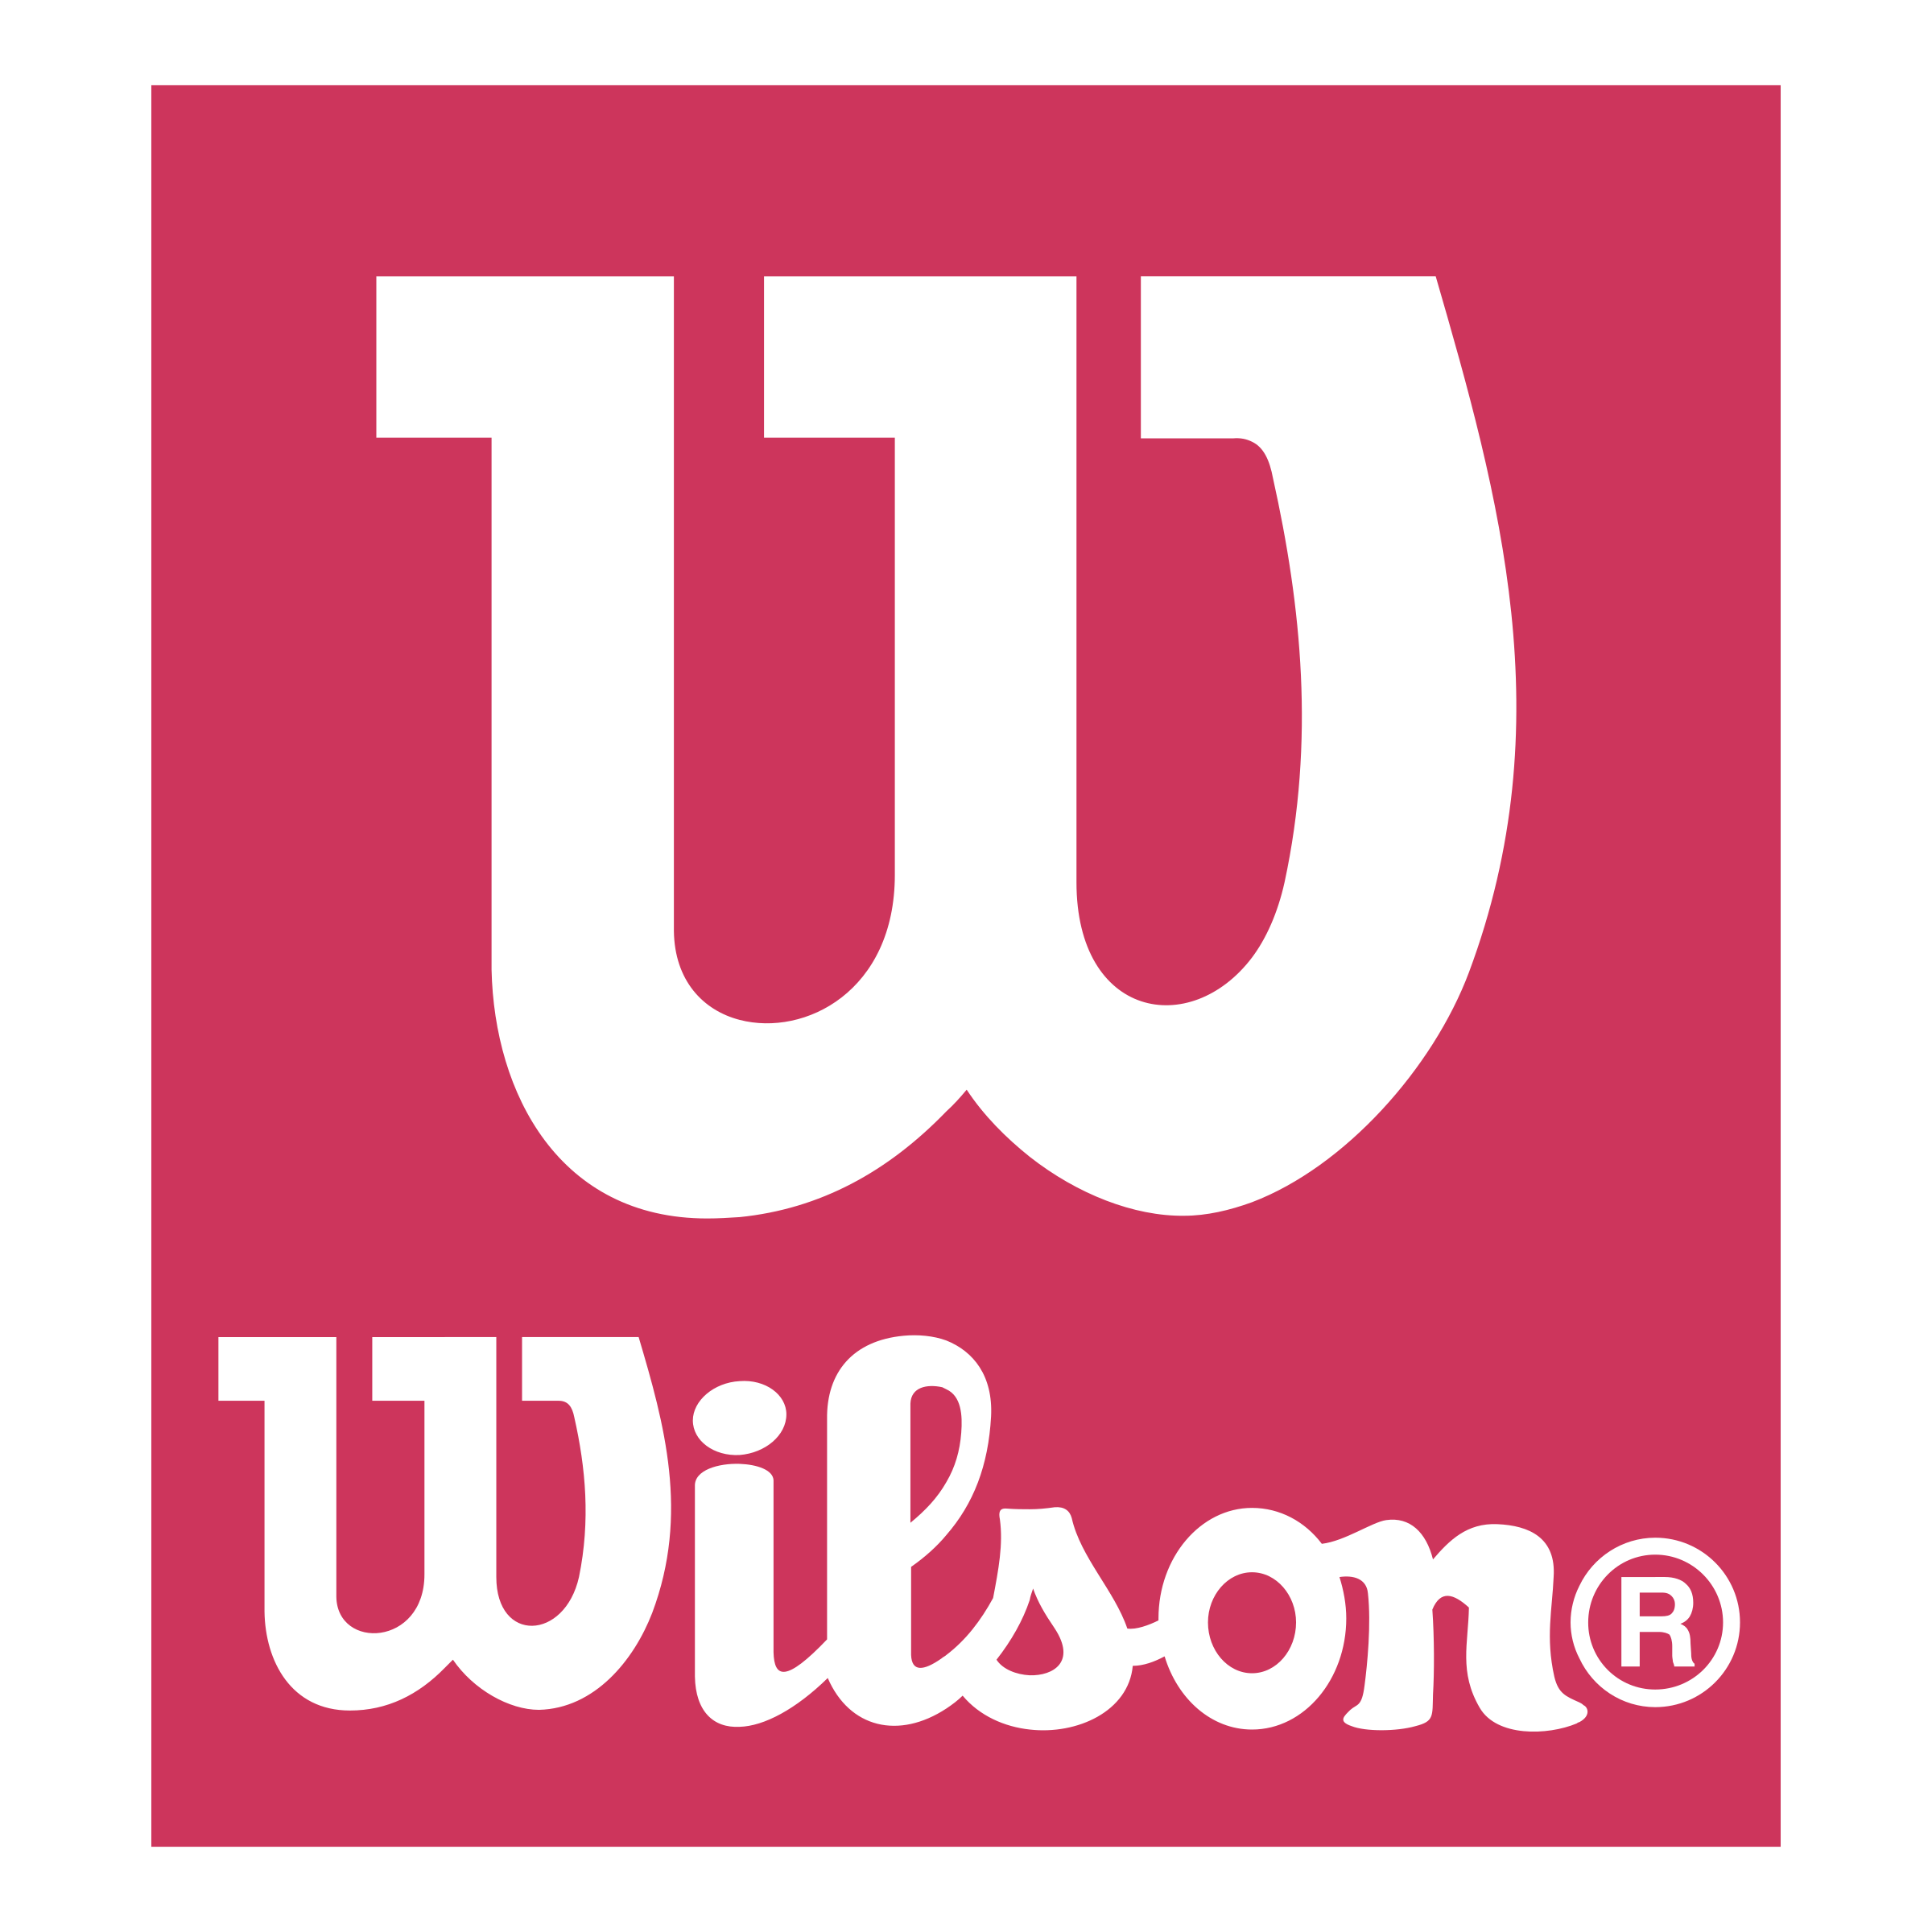 wilson-1-logo-png-transparent.png